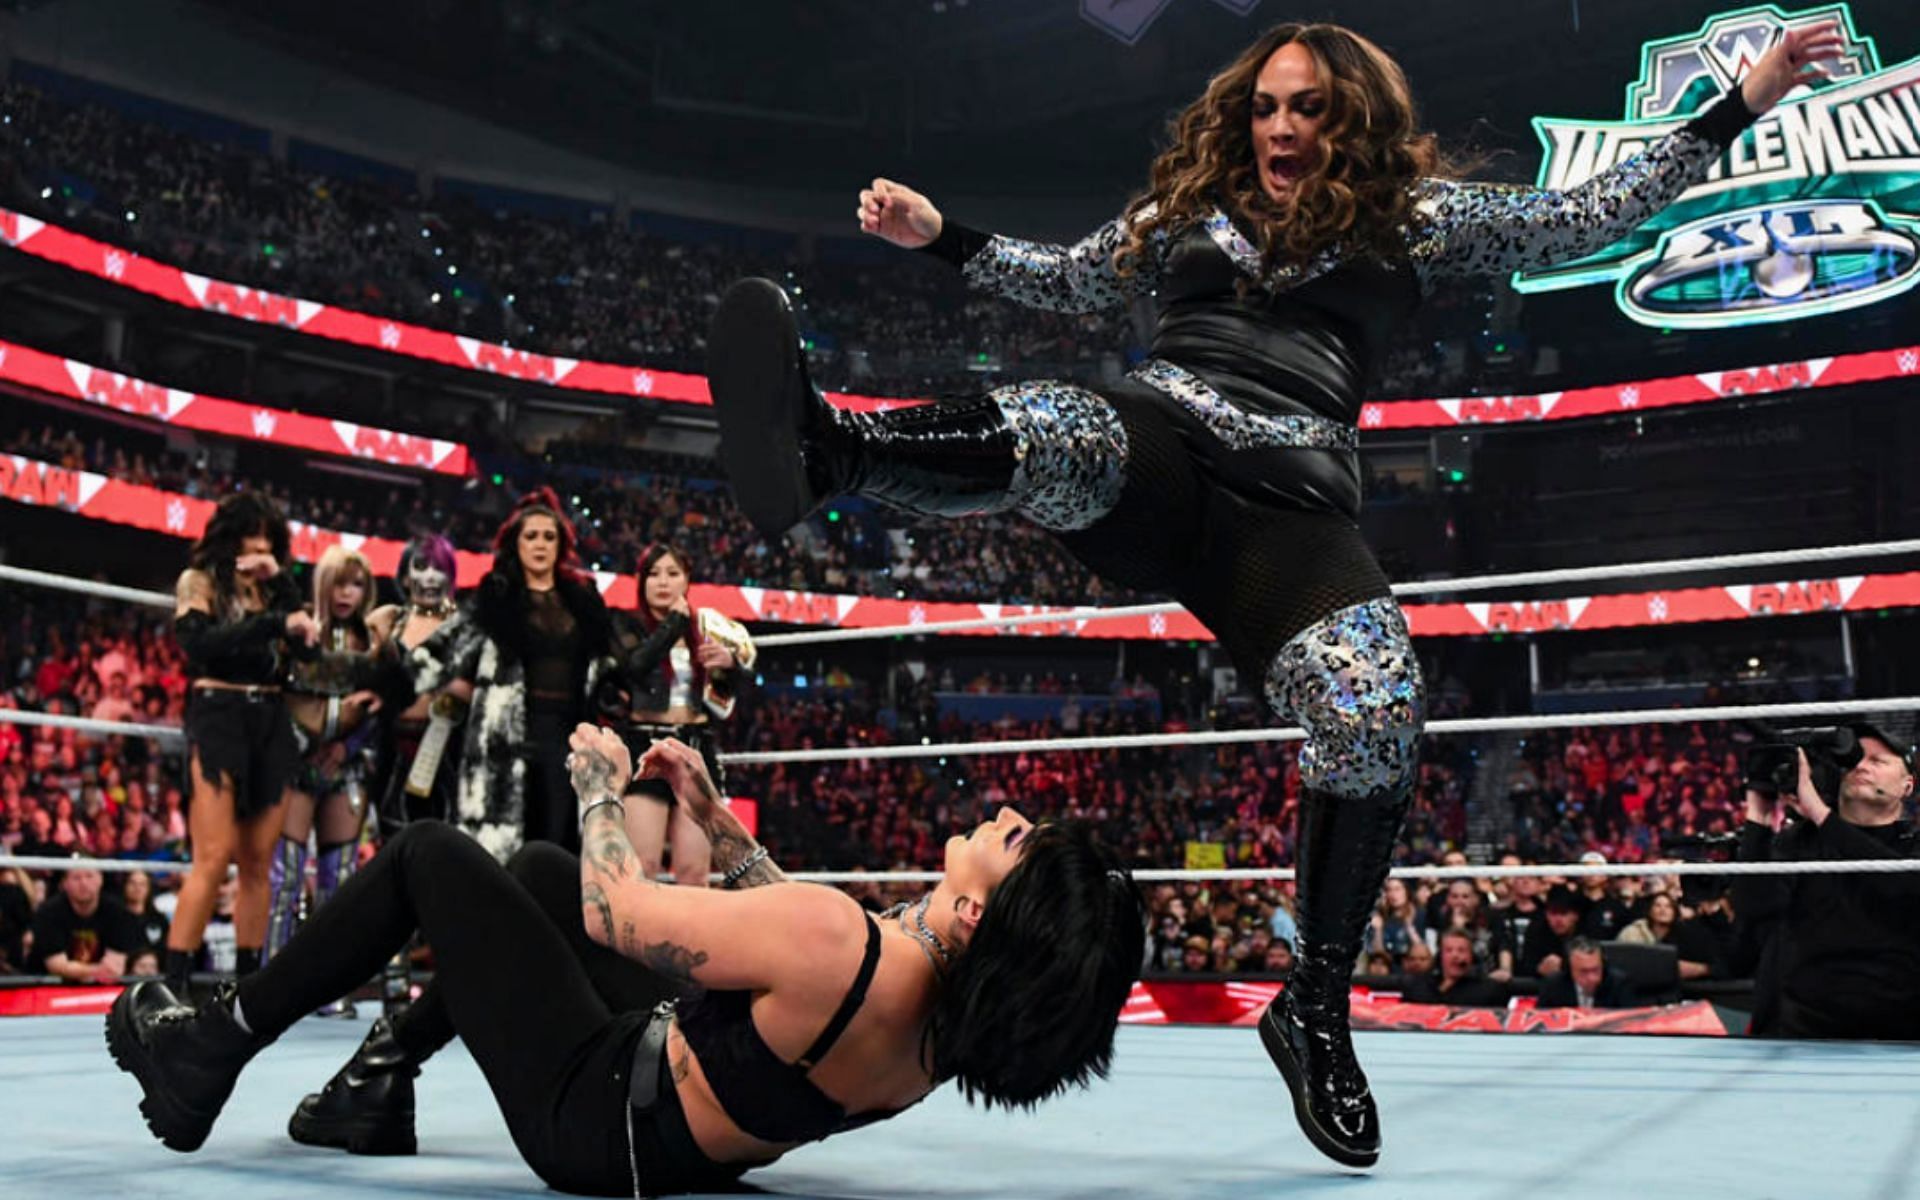 Nia Jax attacked Rhea Ripley on RAW (Image source: WWE)